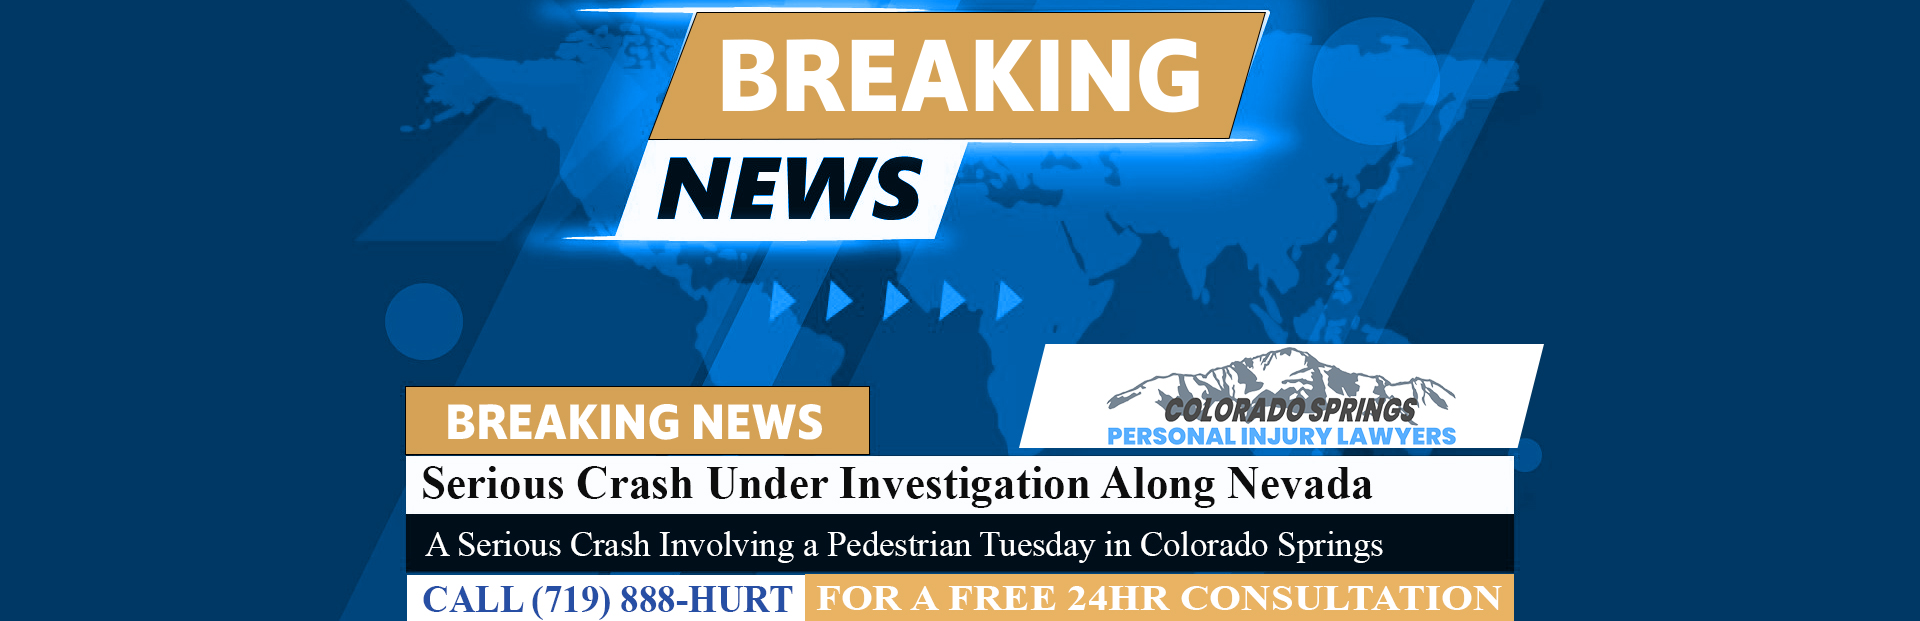 [11-30-23] Serious Crash Under Investigation Along Nevada in Colorado Springs Tuesday